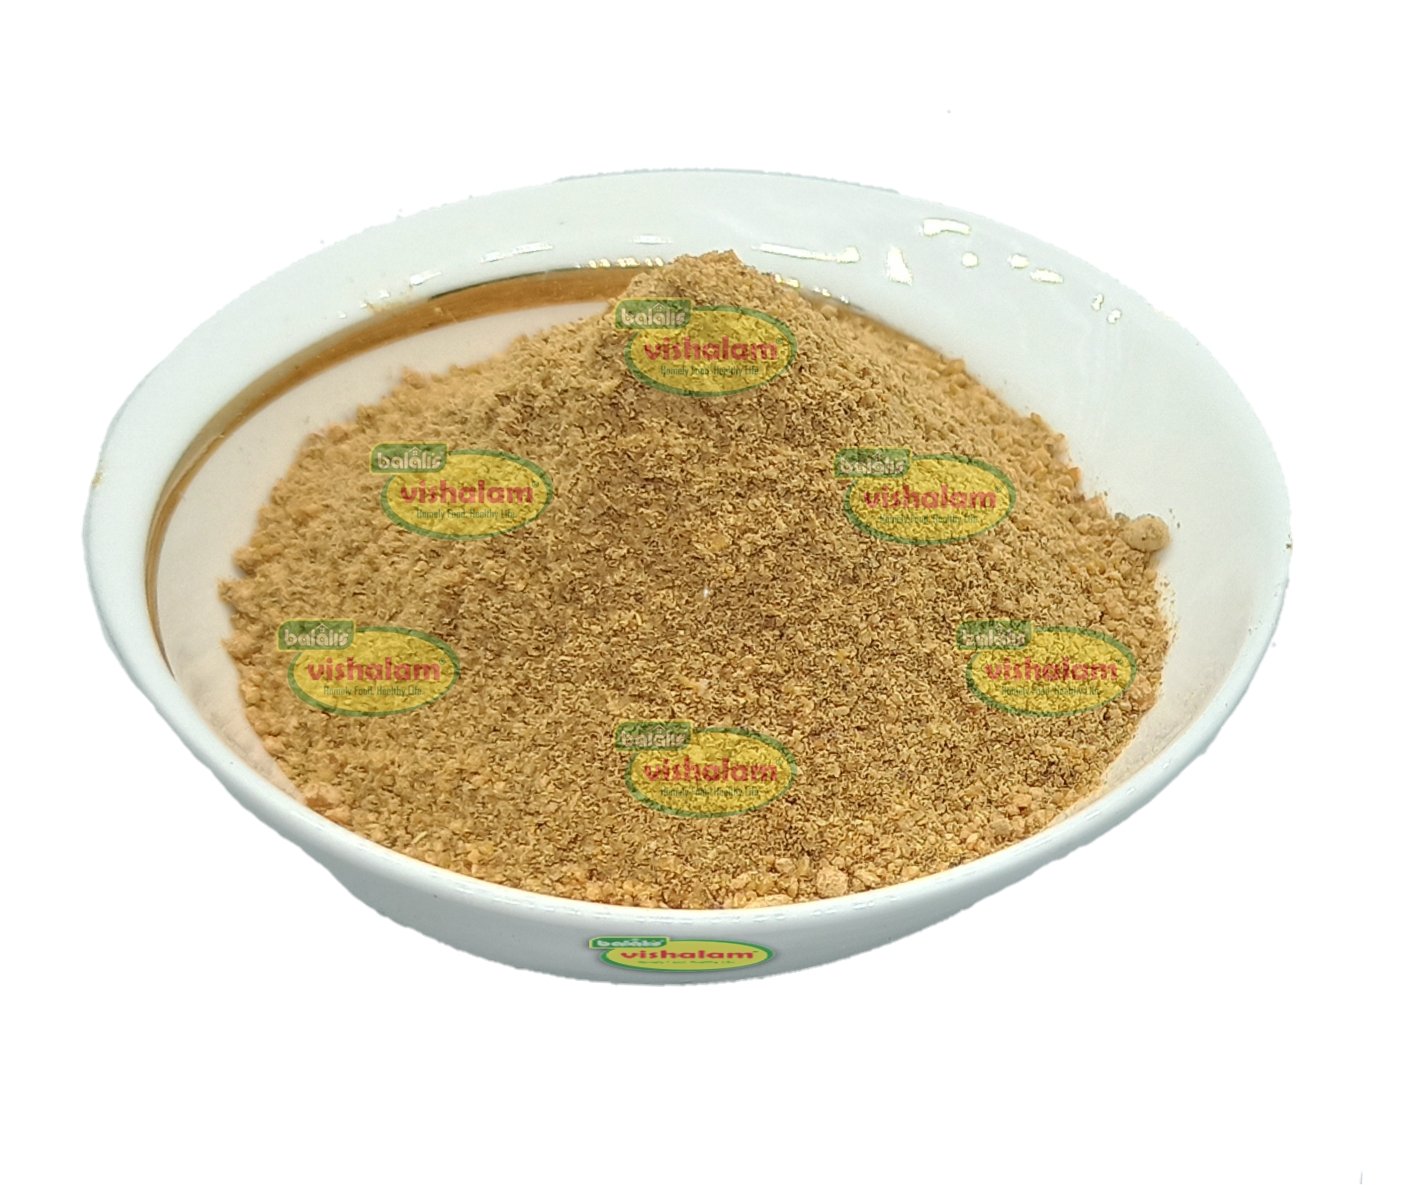 Fenugreek Rice Mix - Balali's Vishalam